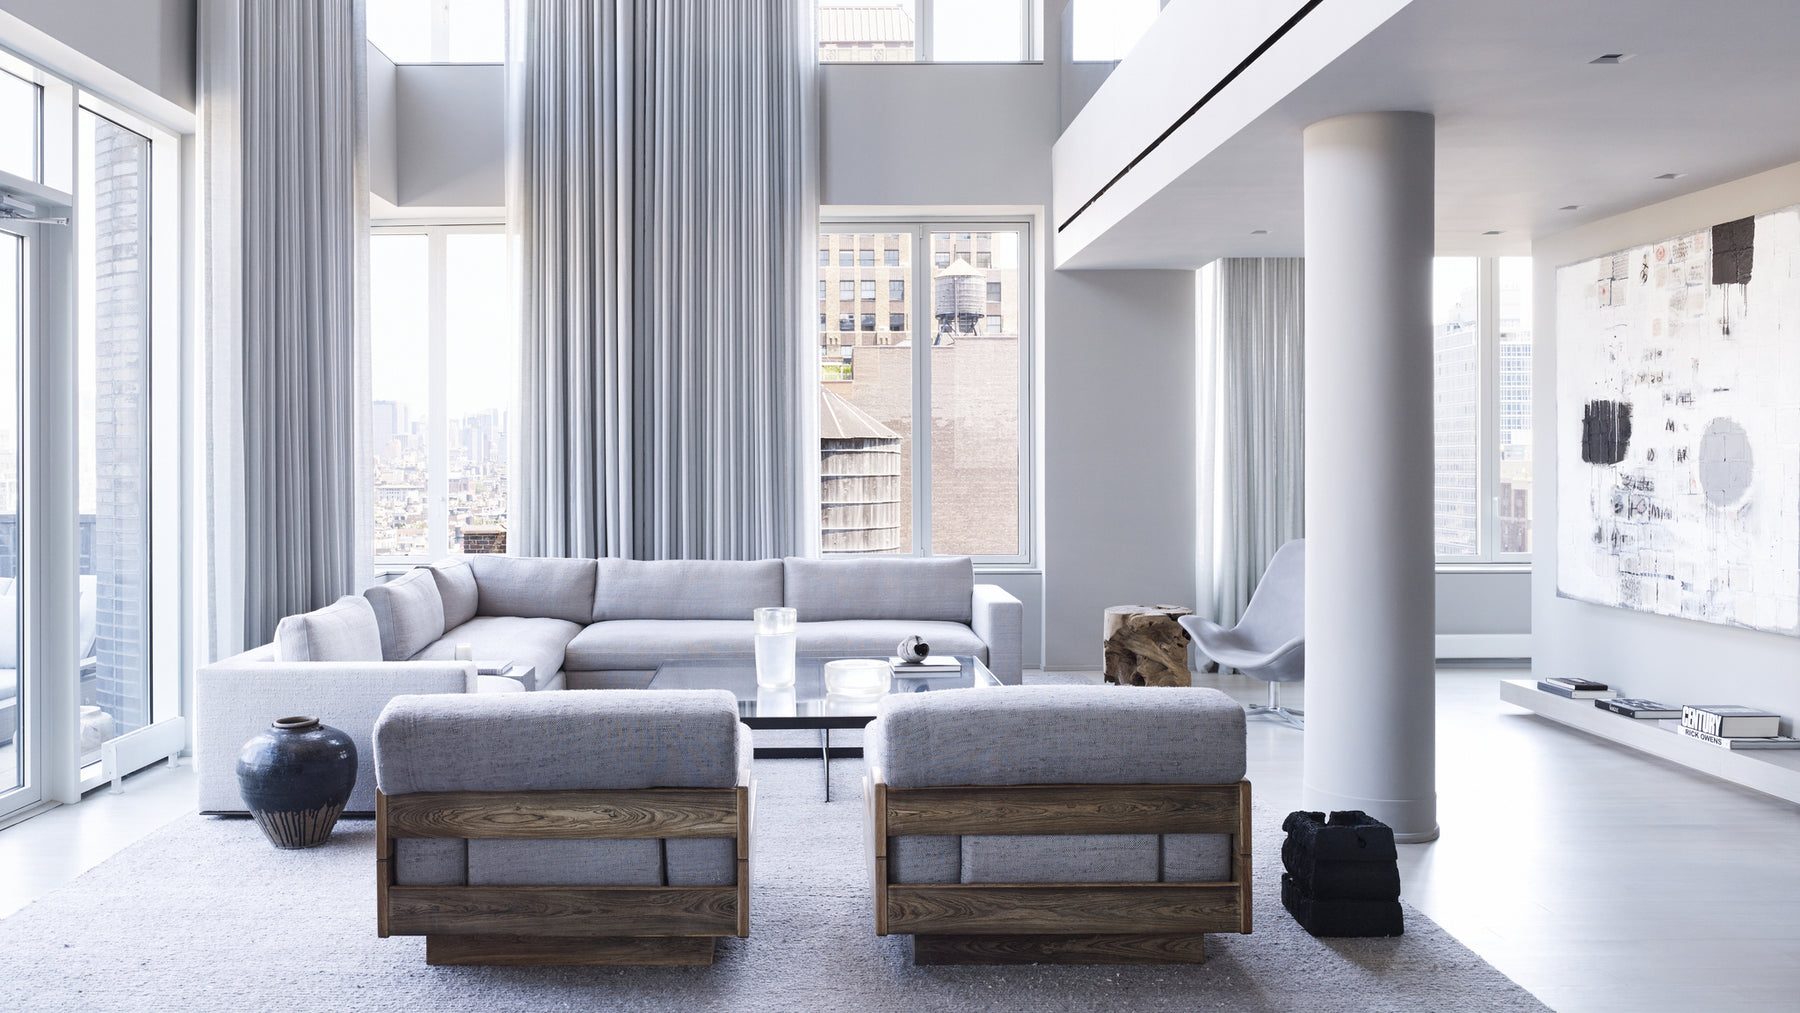 Penthouse luxury lifestyle - modern luxury interior design by Mar Silver